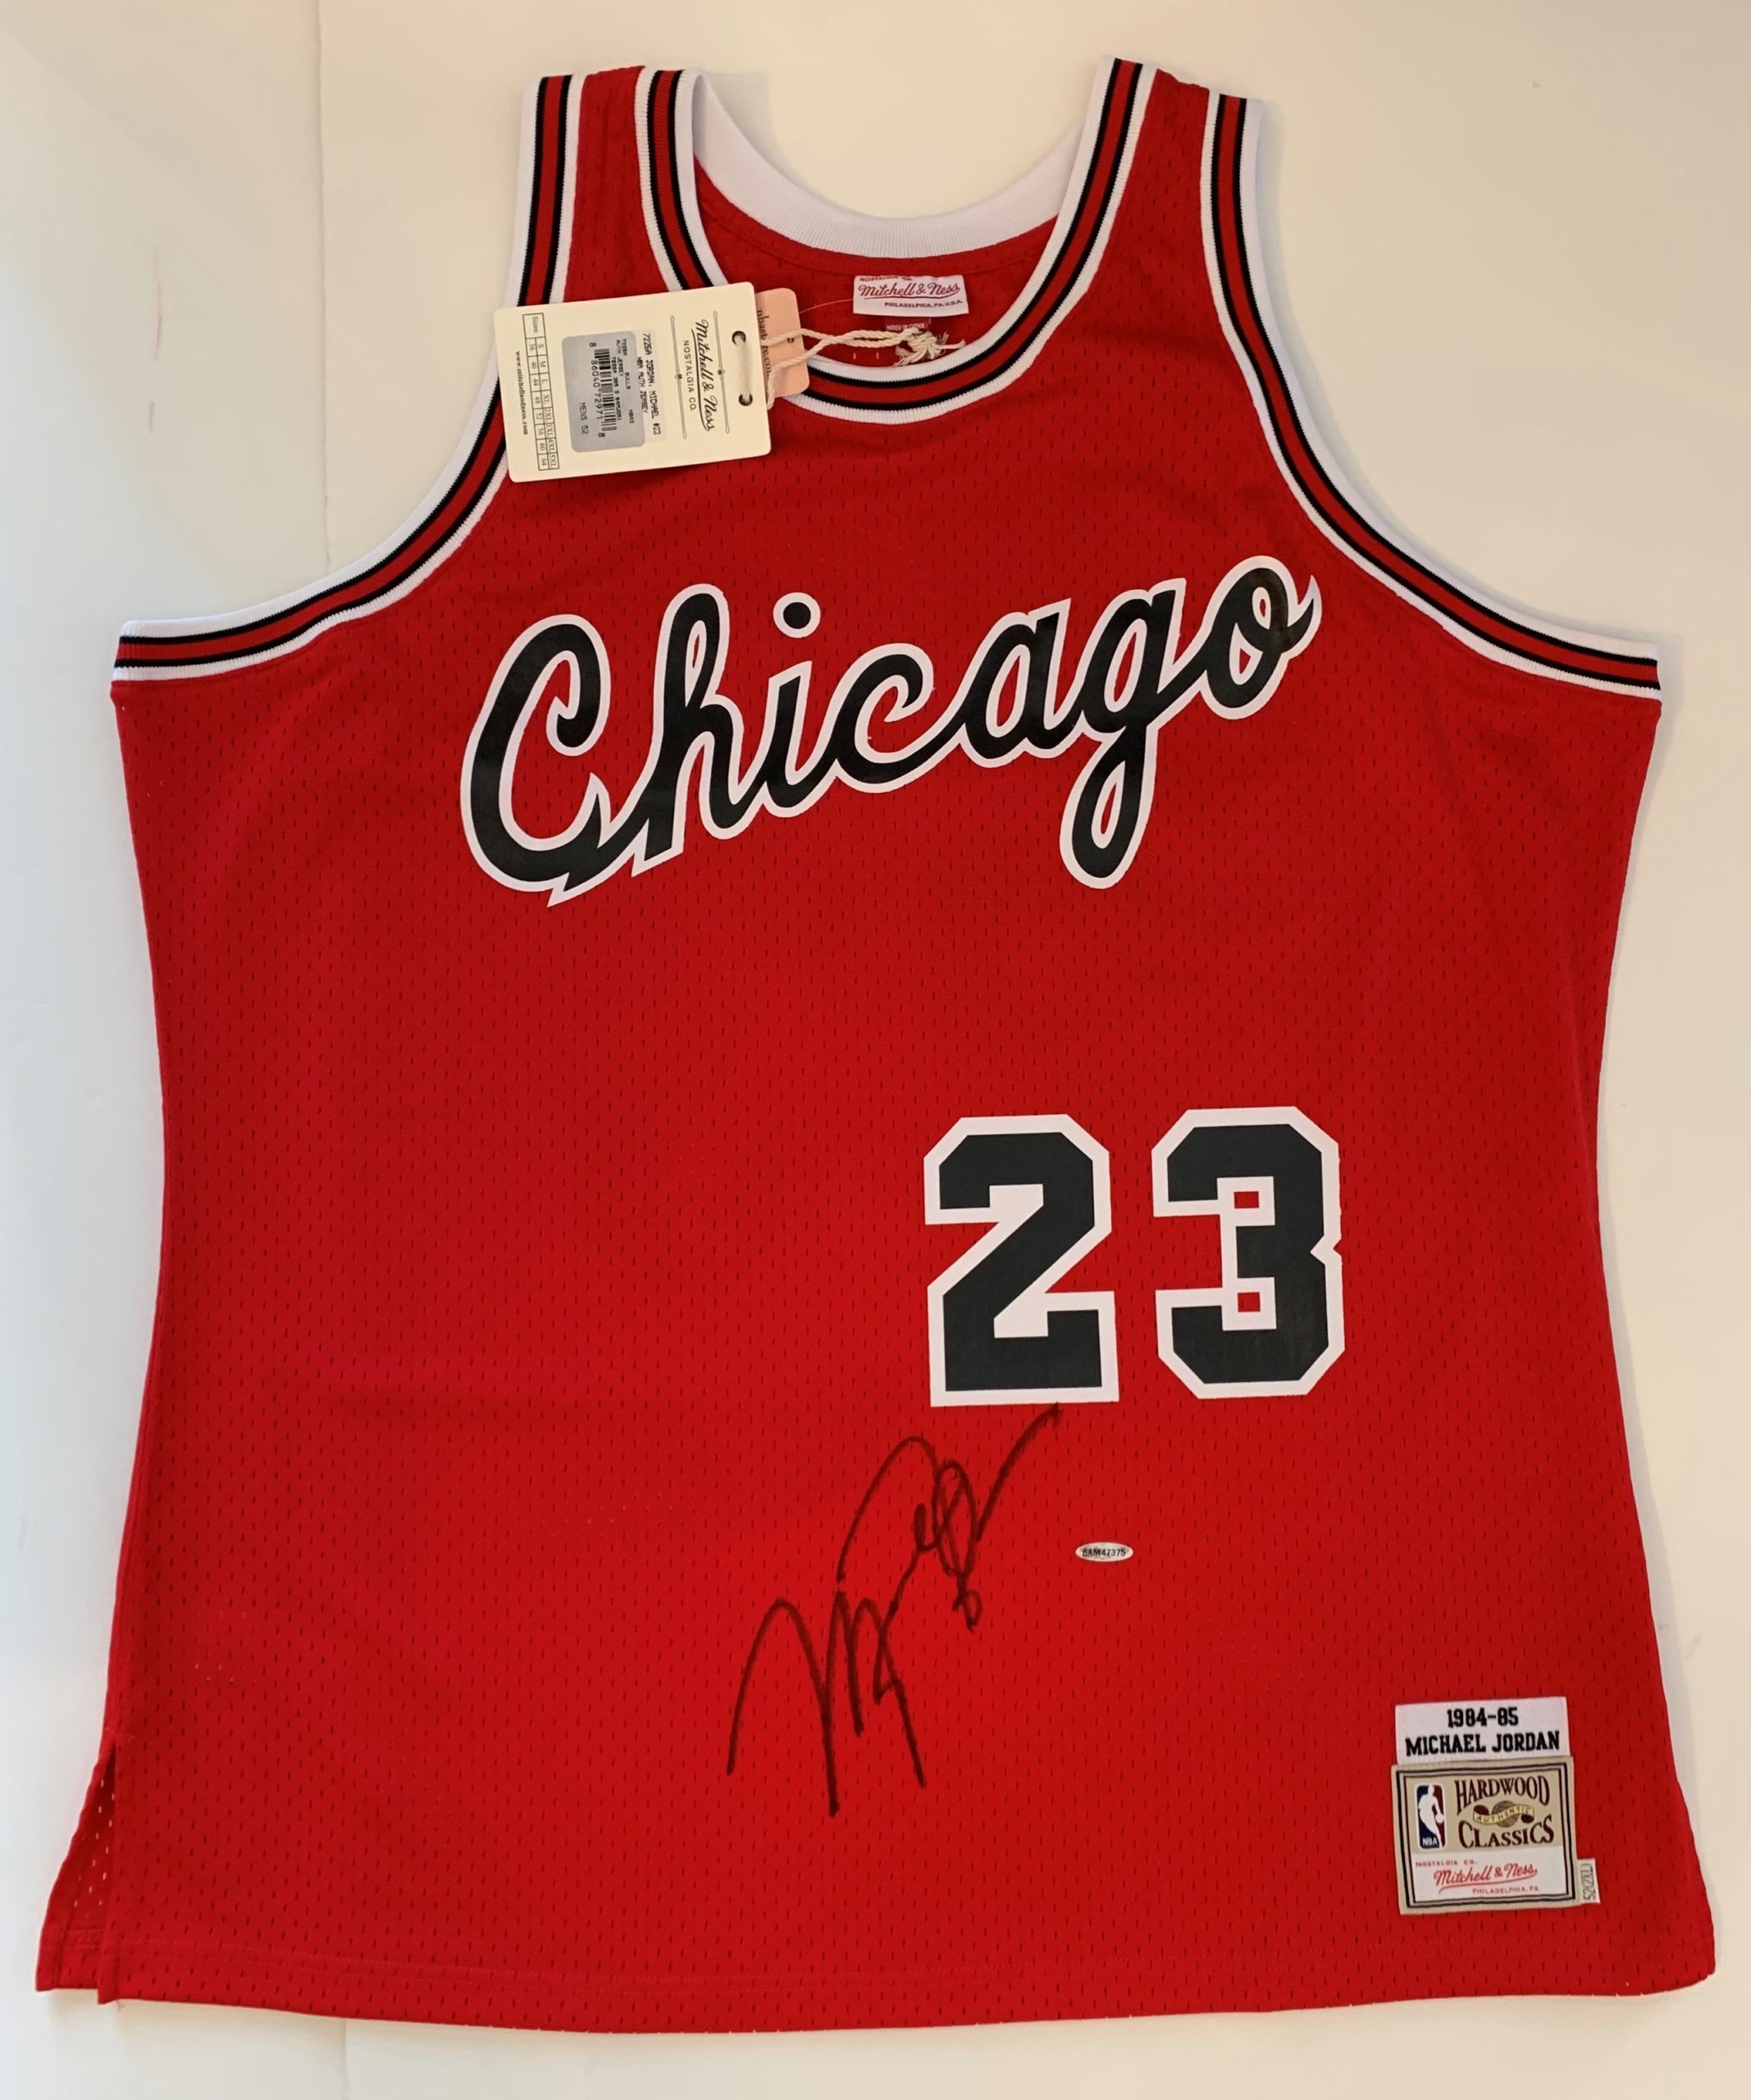 Michael Jordan Chicago Bulls Autographed Red Mitchell & Ness